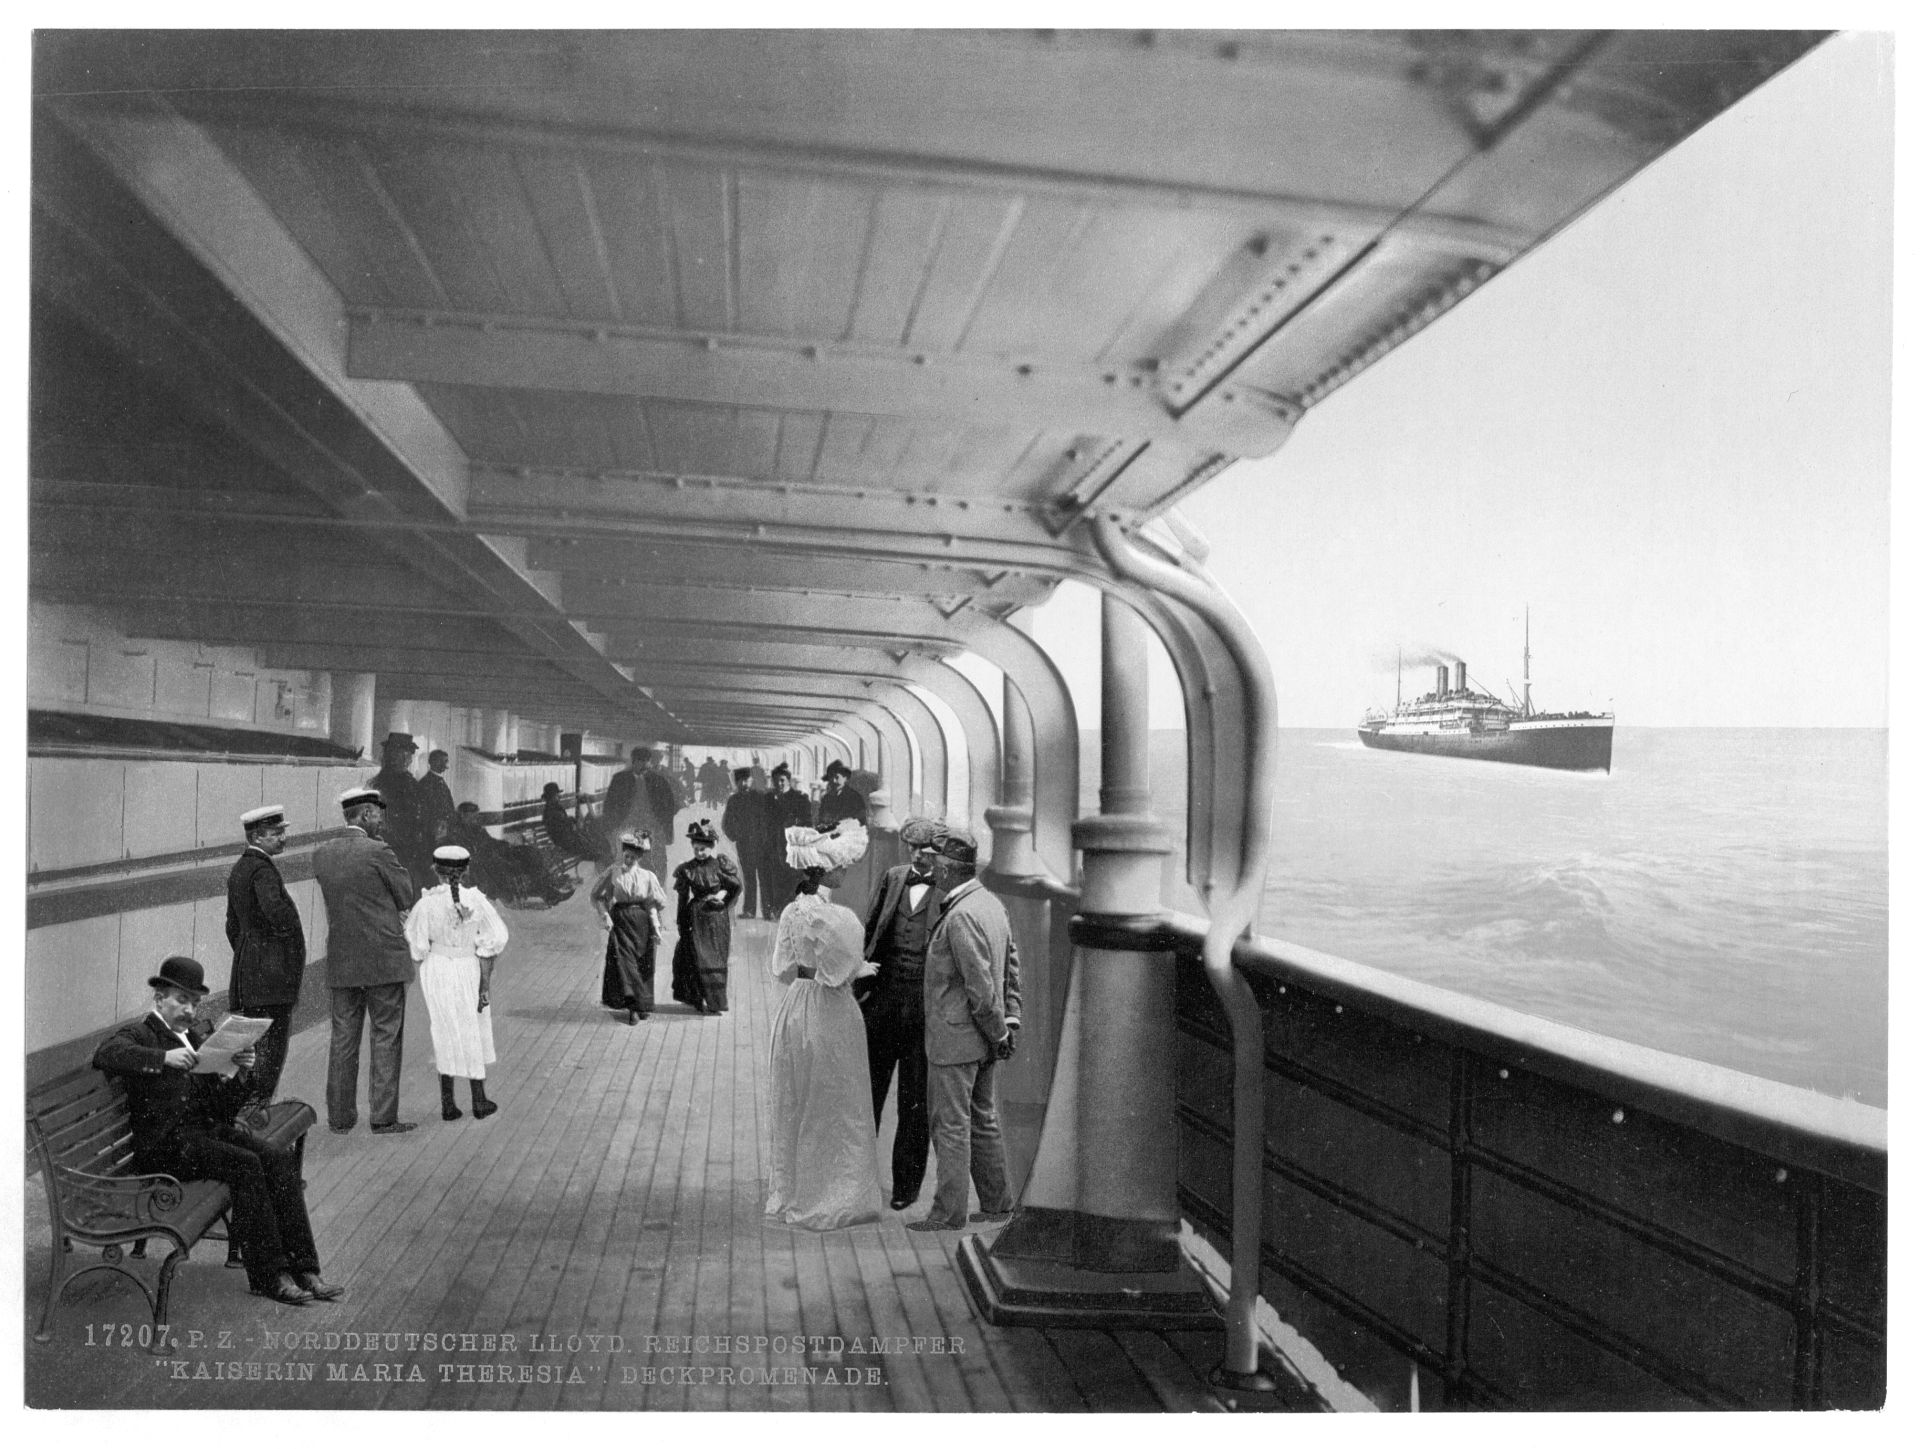 "Maria Theresia," Promenade Deck, North German Lloyd, Royal Mail Steamers